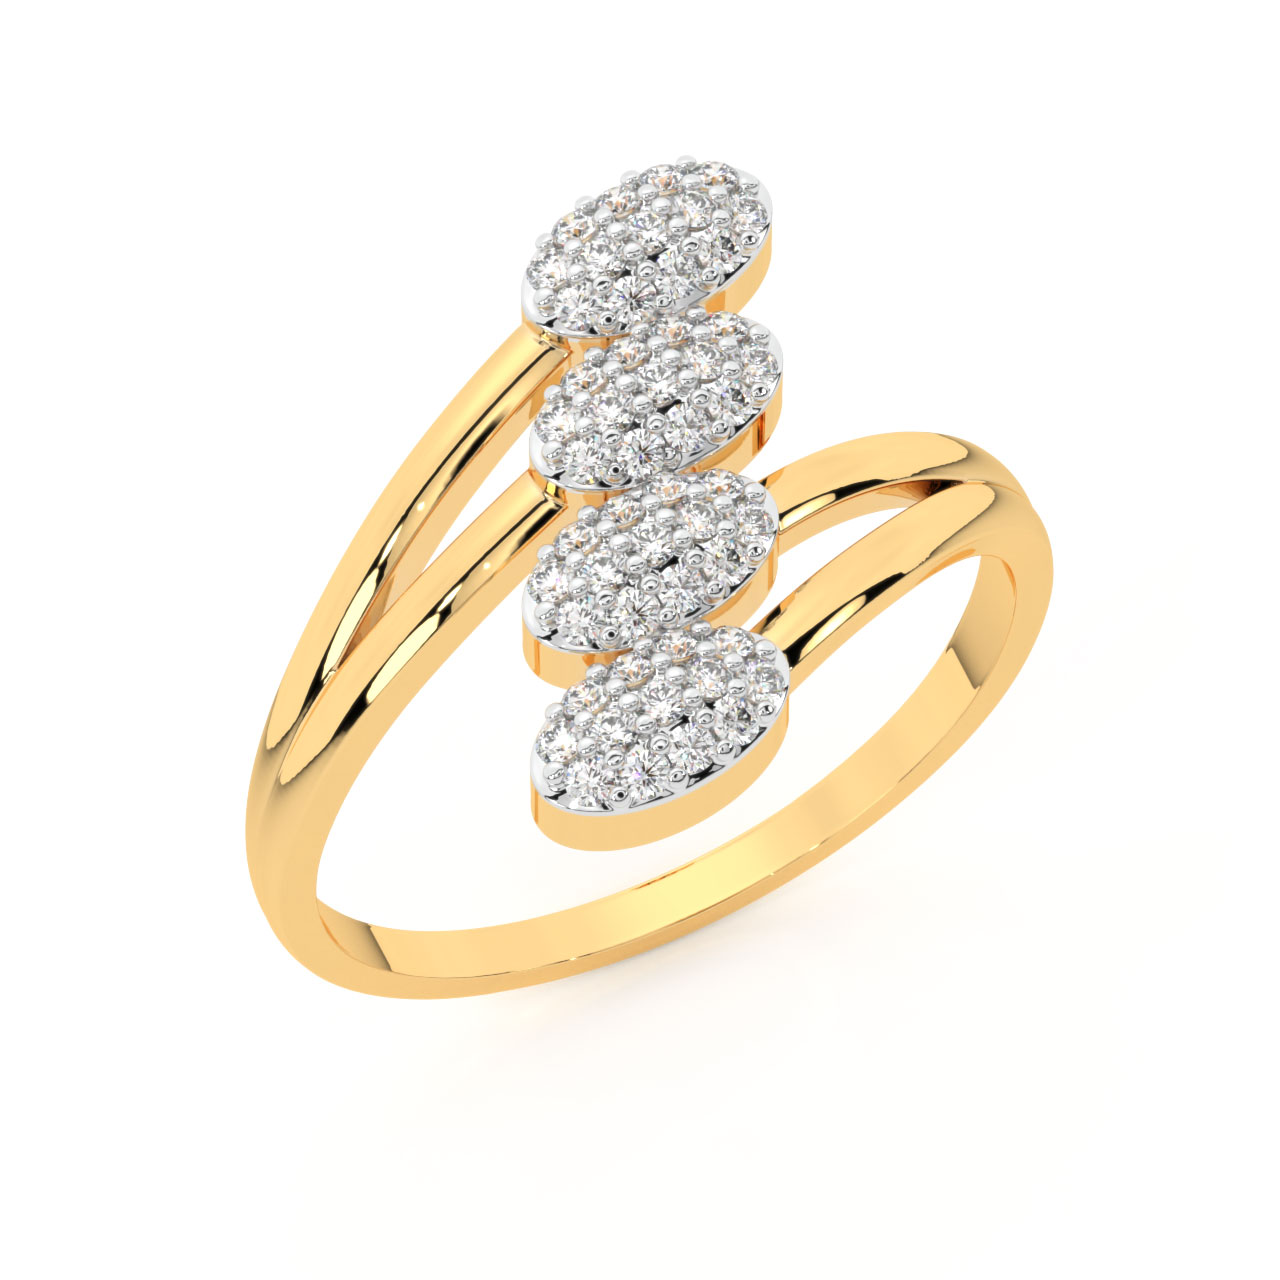 Moira Round Diamond Engagement Ring